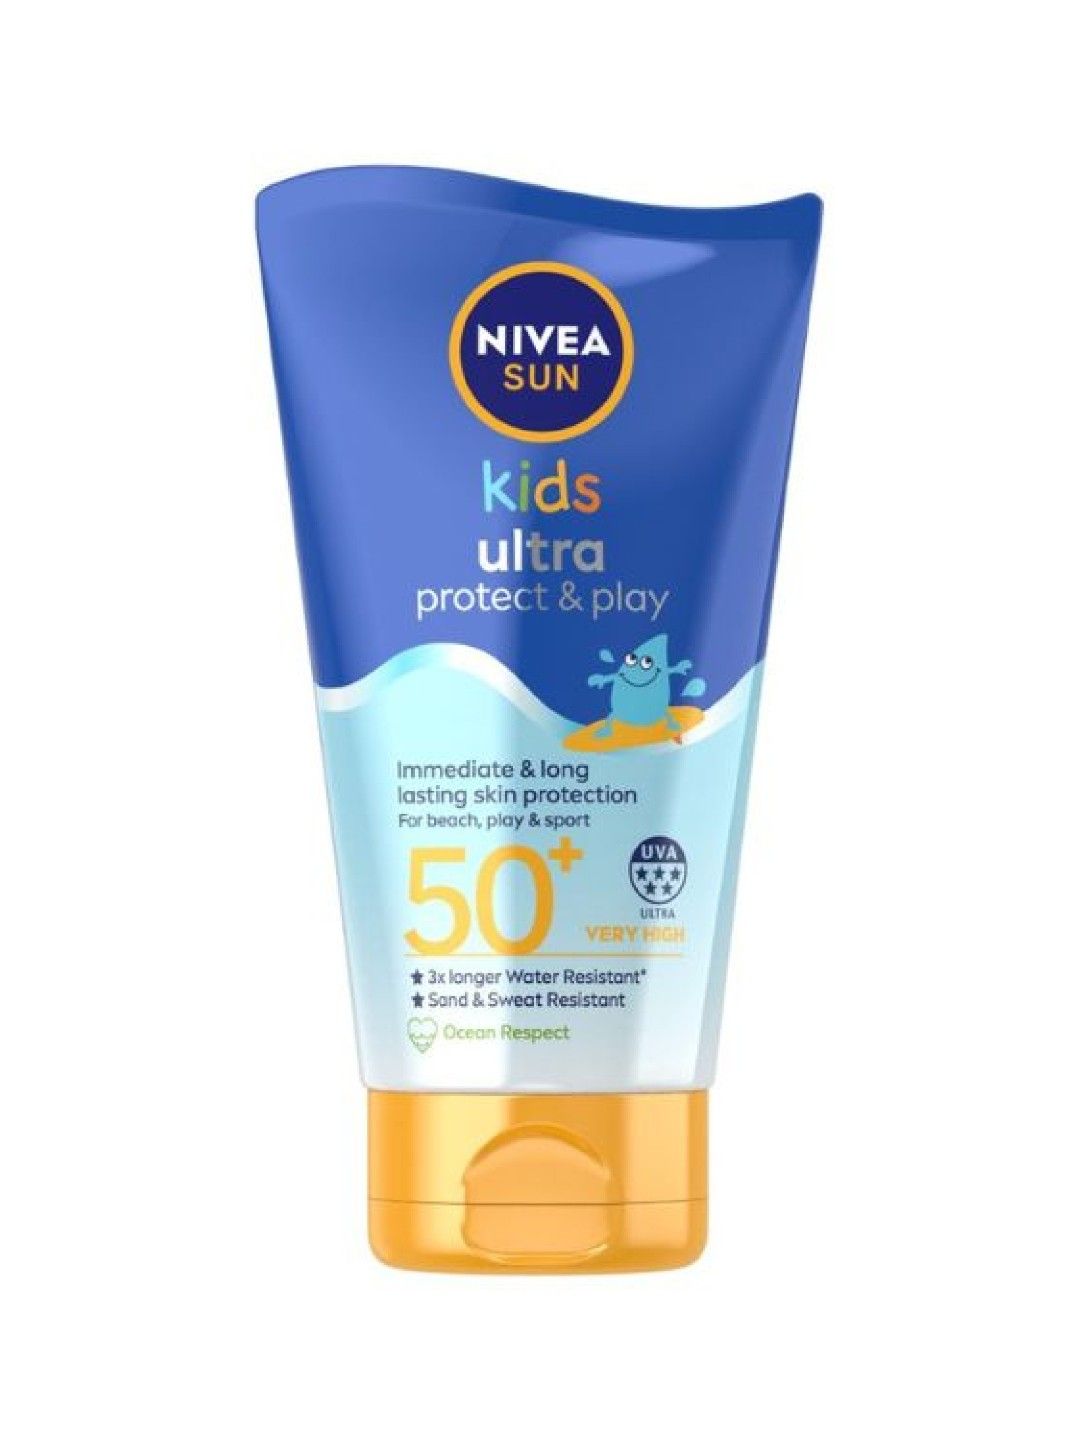 NIVEA Sun Kids Ultra Protect & Play Lotion w/ SPF 50, Sunscreen for Kids, 150ml